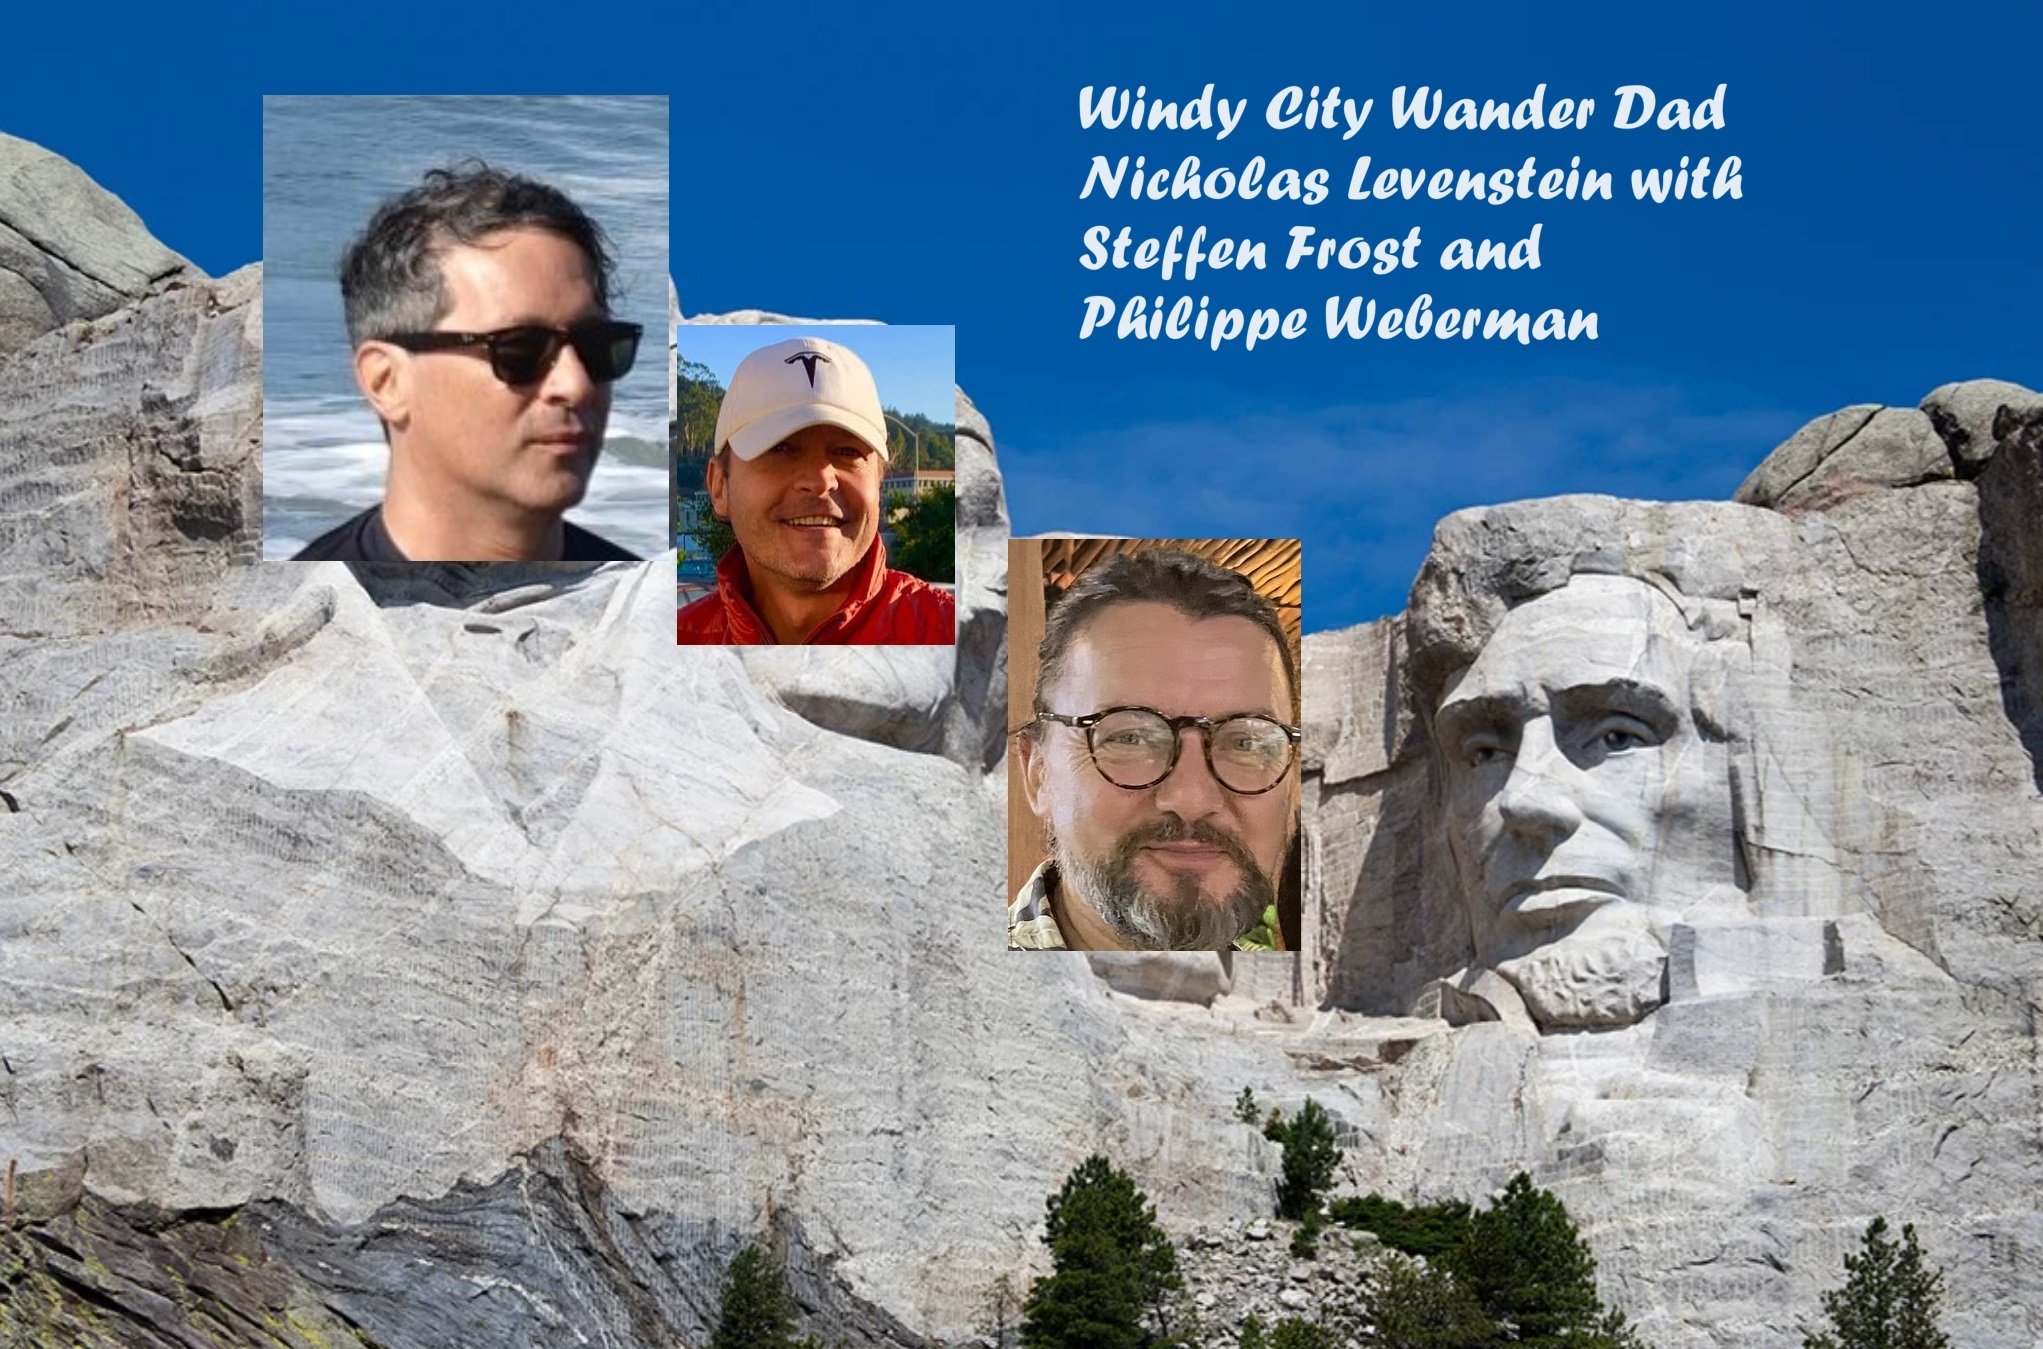 Mount Rushmore Windy City Wander Dad